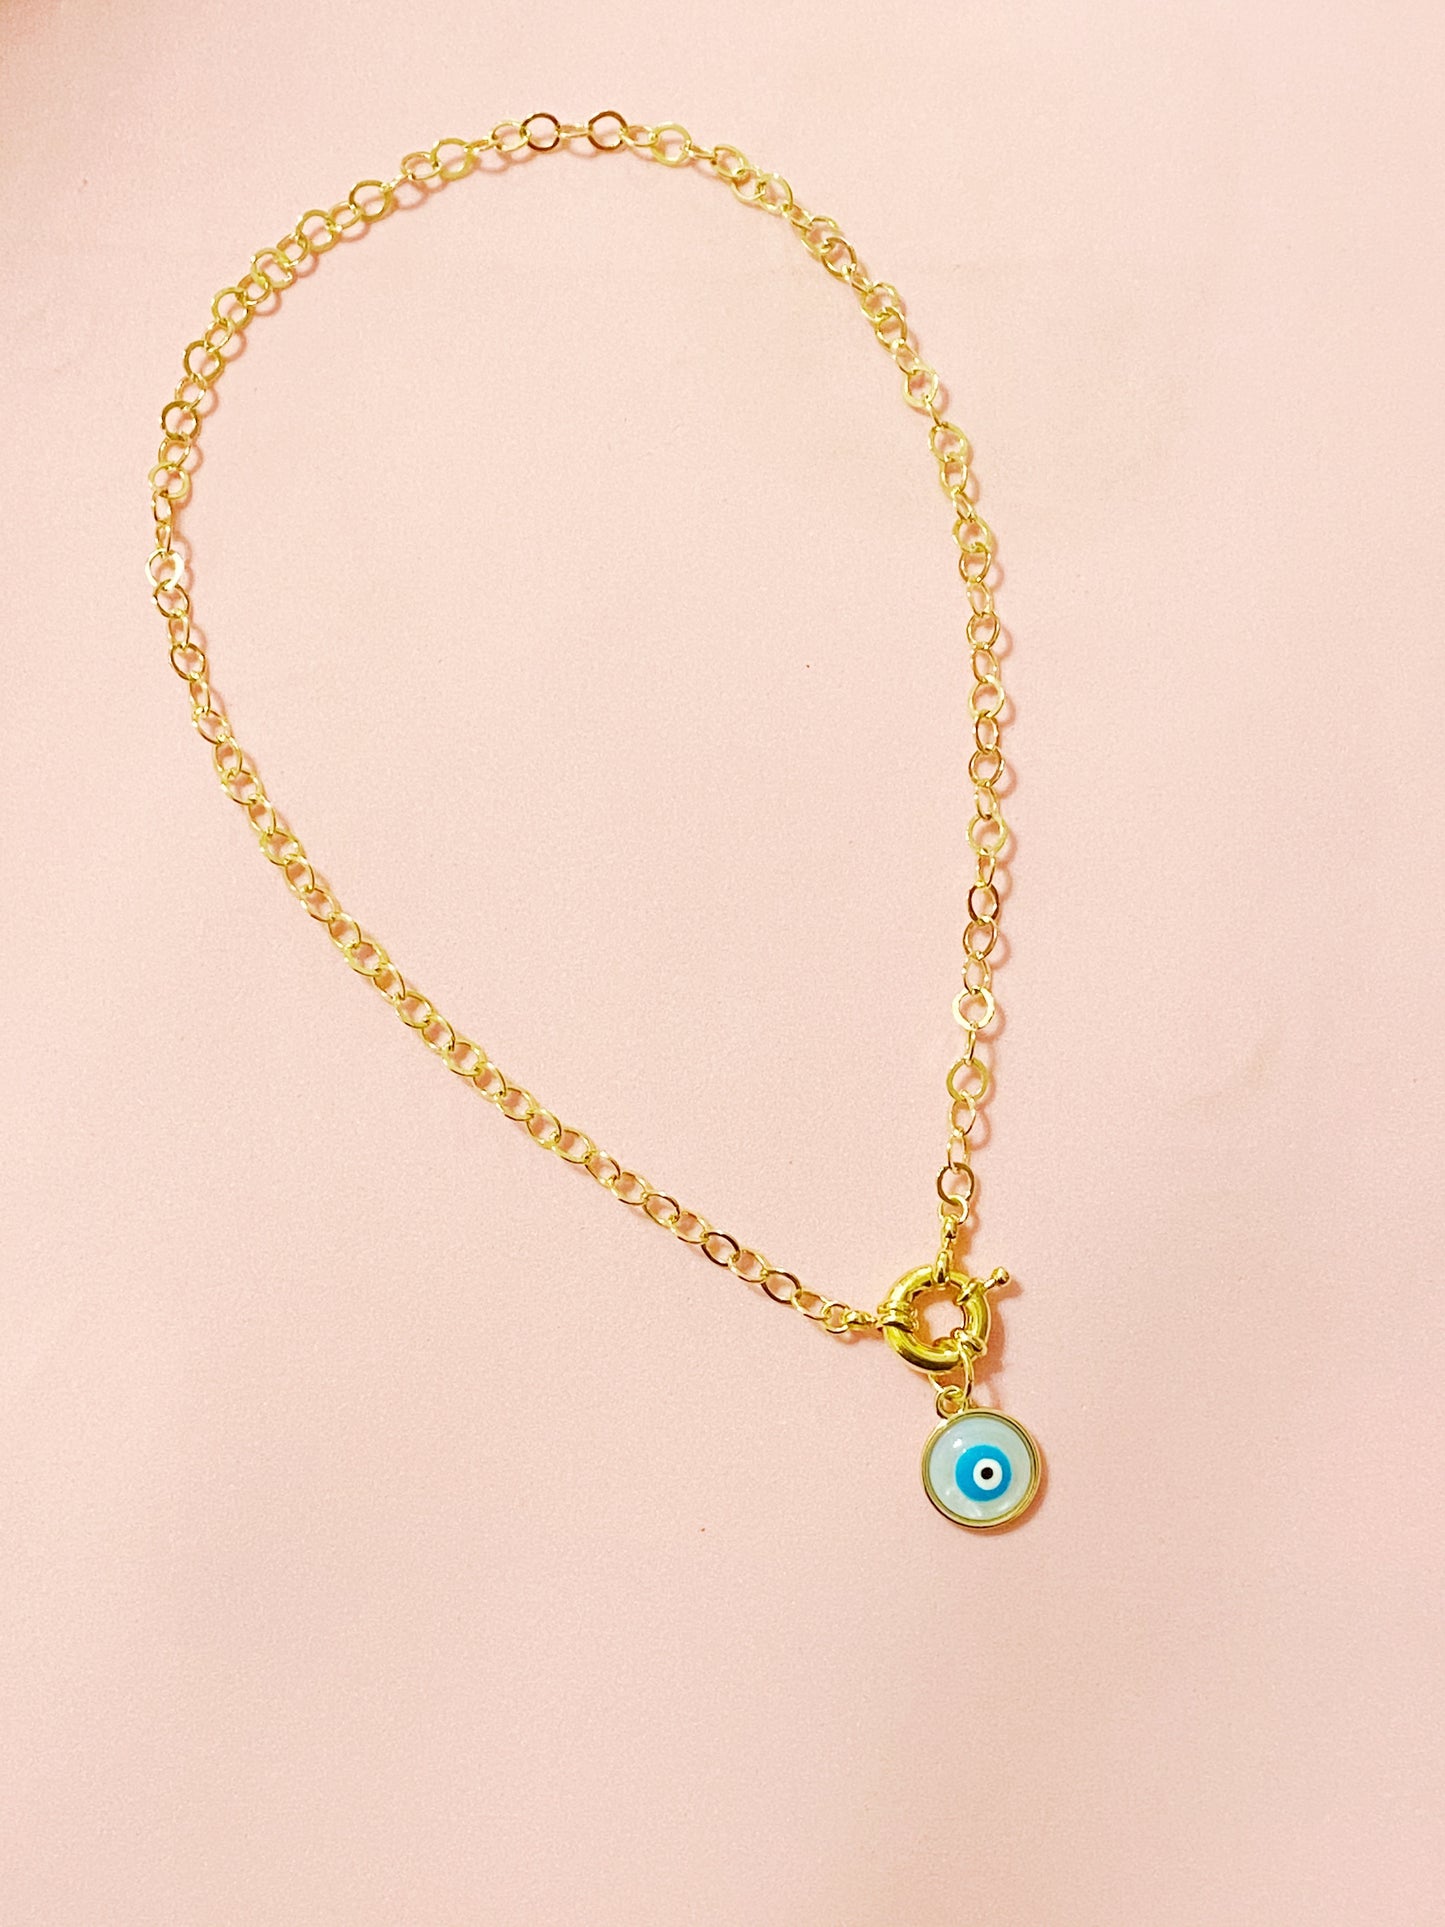 Evileye LB Gold Edition Necklace - ROCKmint